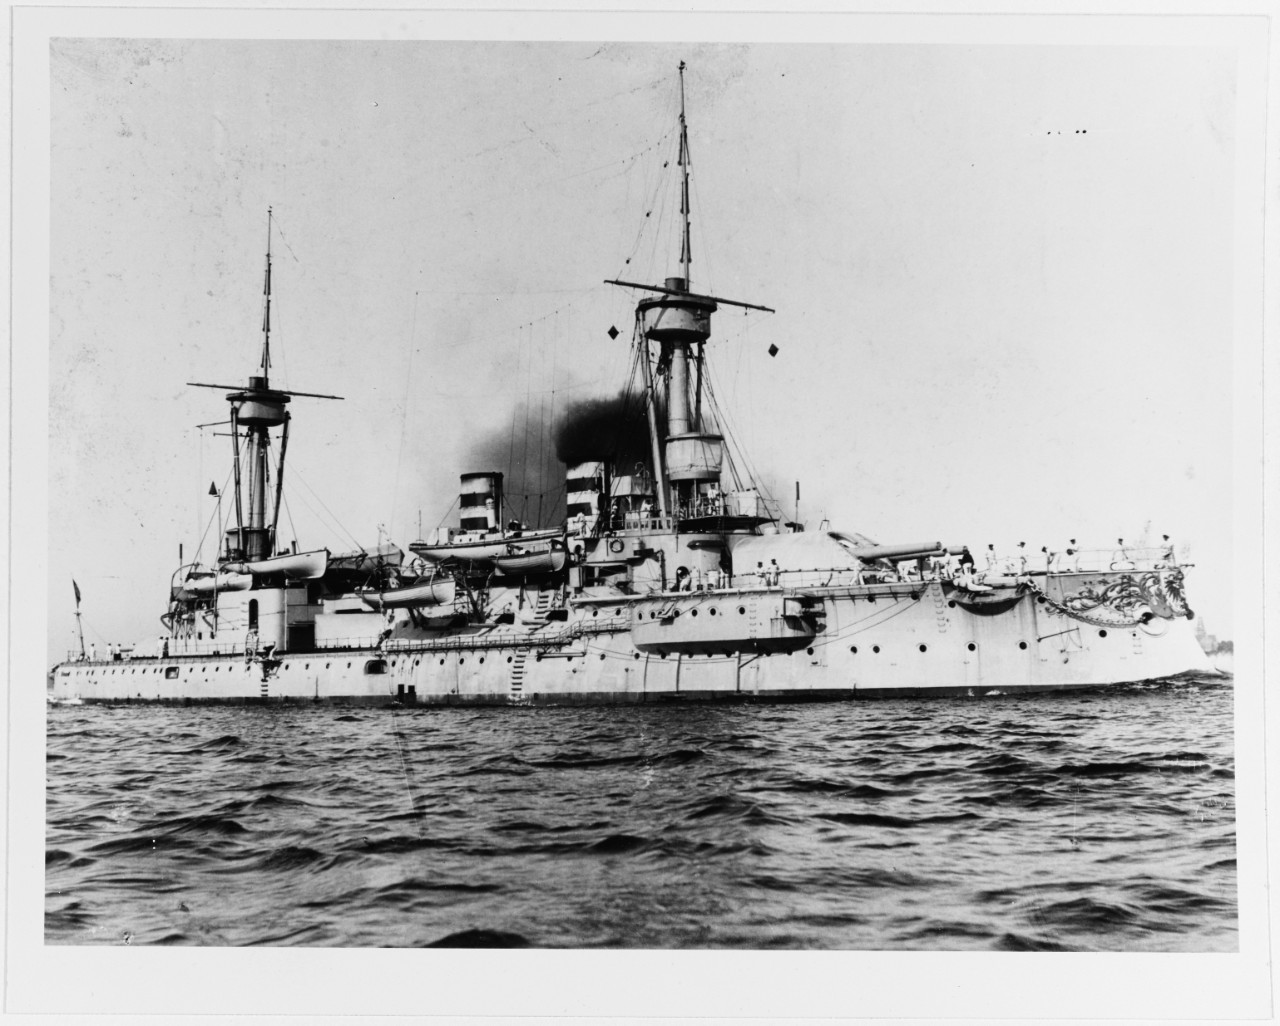 WORTH (German battleship, 1892-1919)